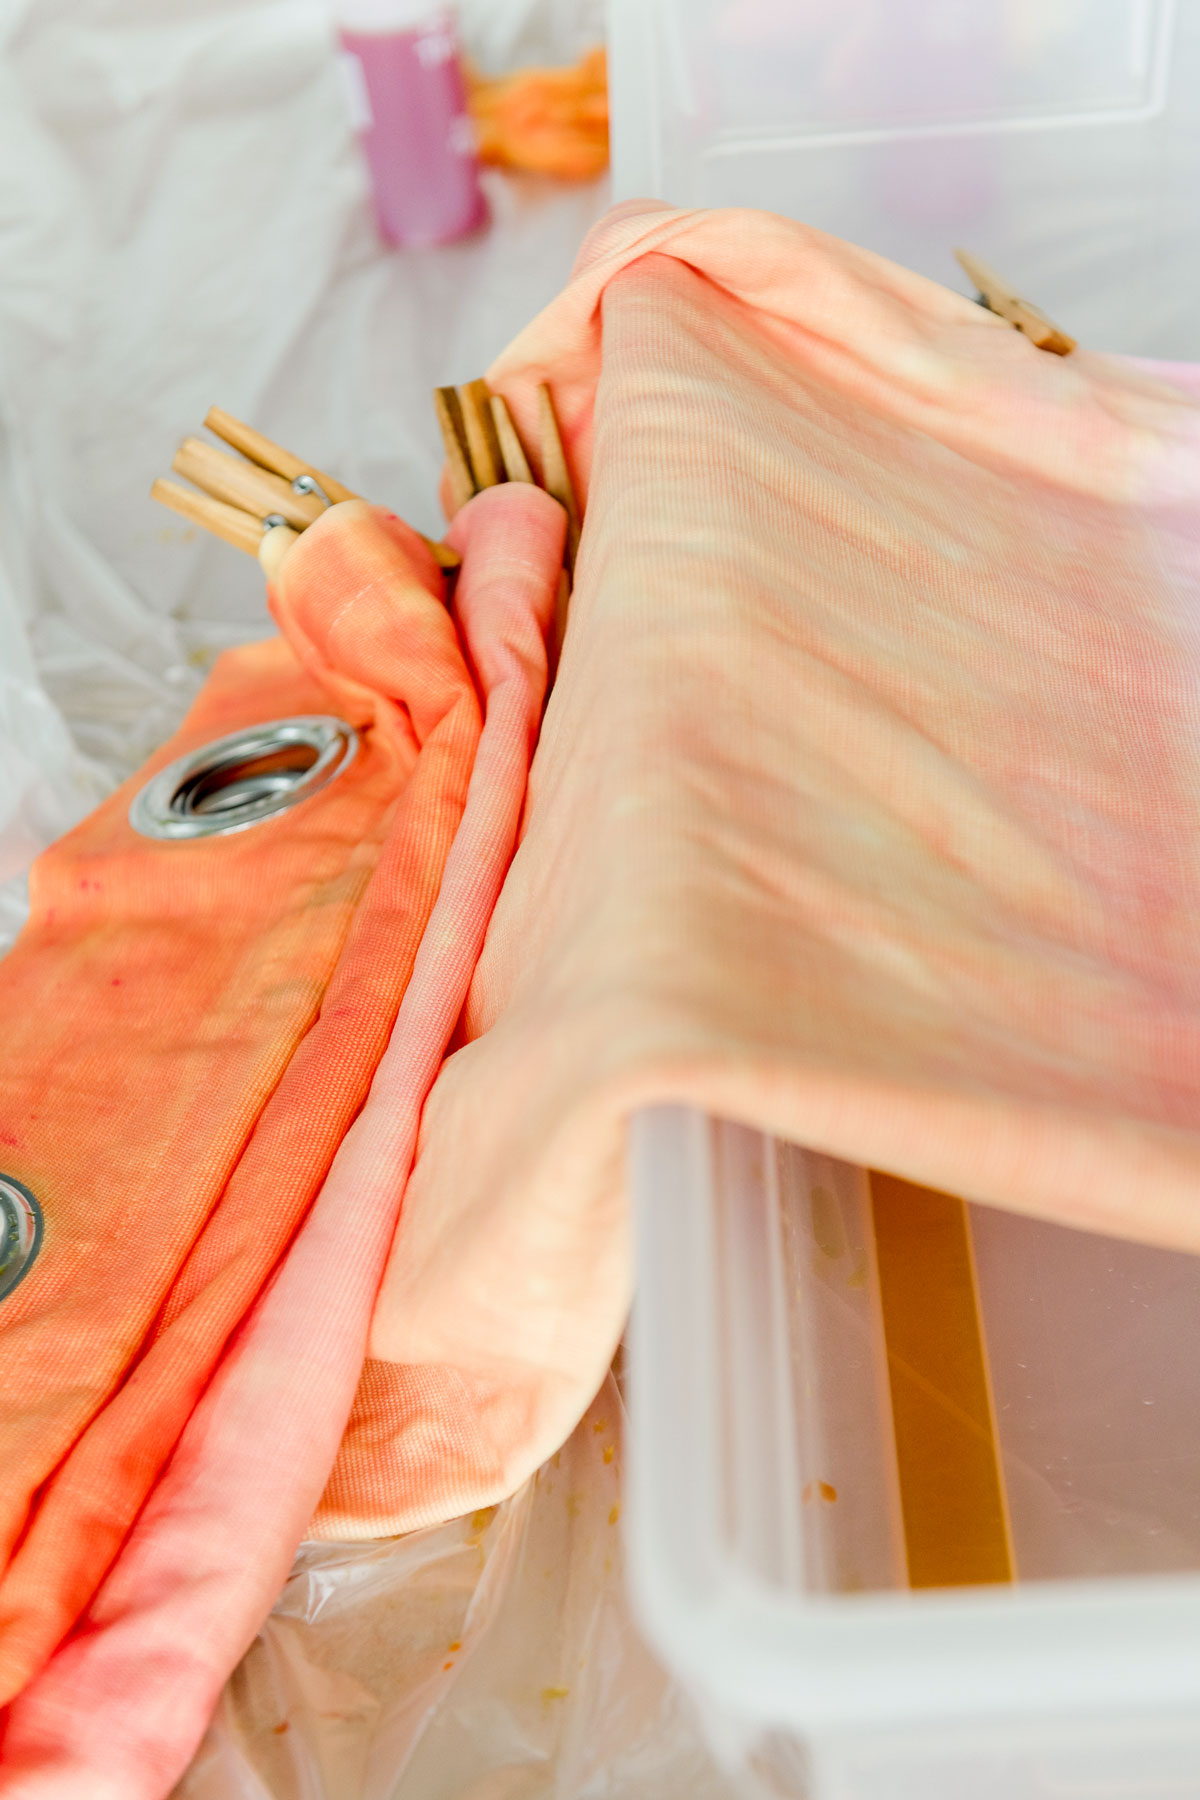 Ombre Tie Dye DIY, How to ombre with tie dye, Ombre tie dye curtain DIY, How to tie dye curtains, Tulip Tie dye tutorial